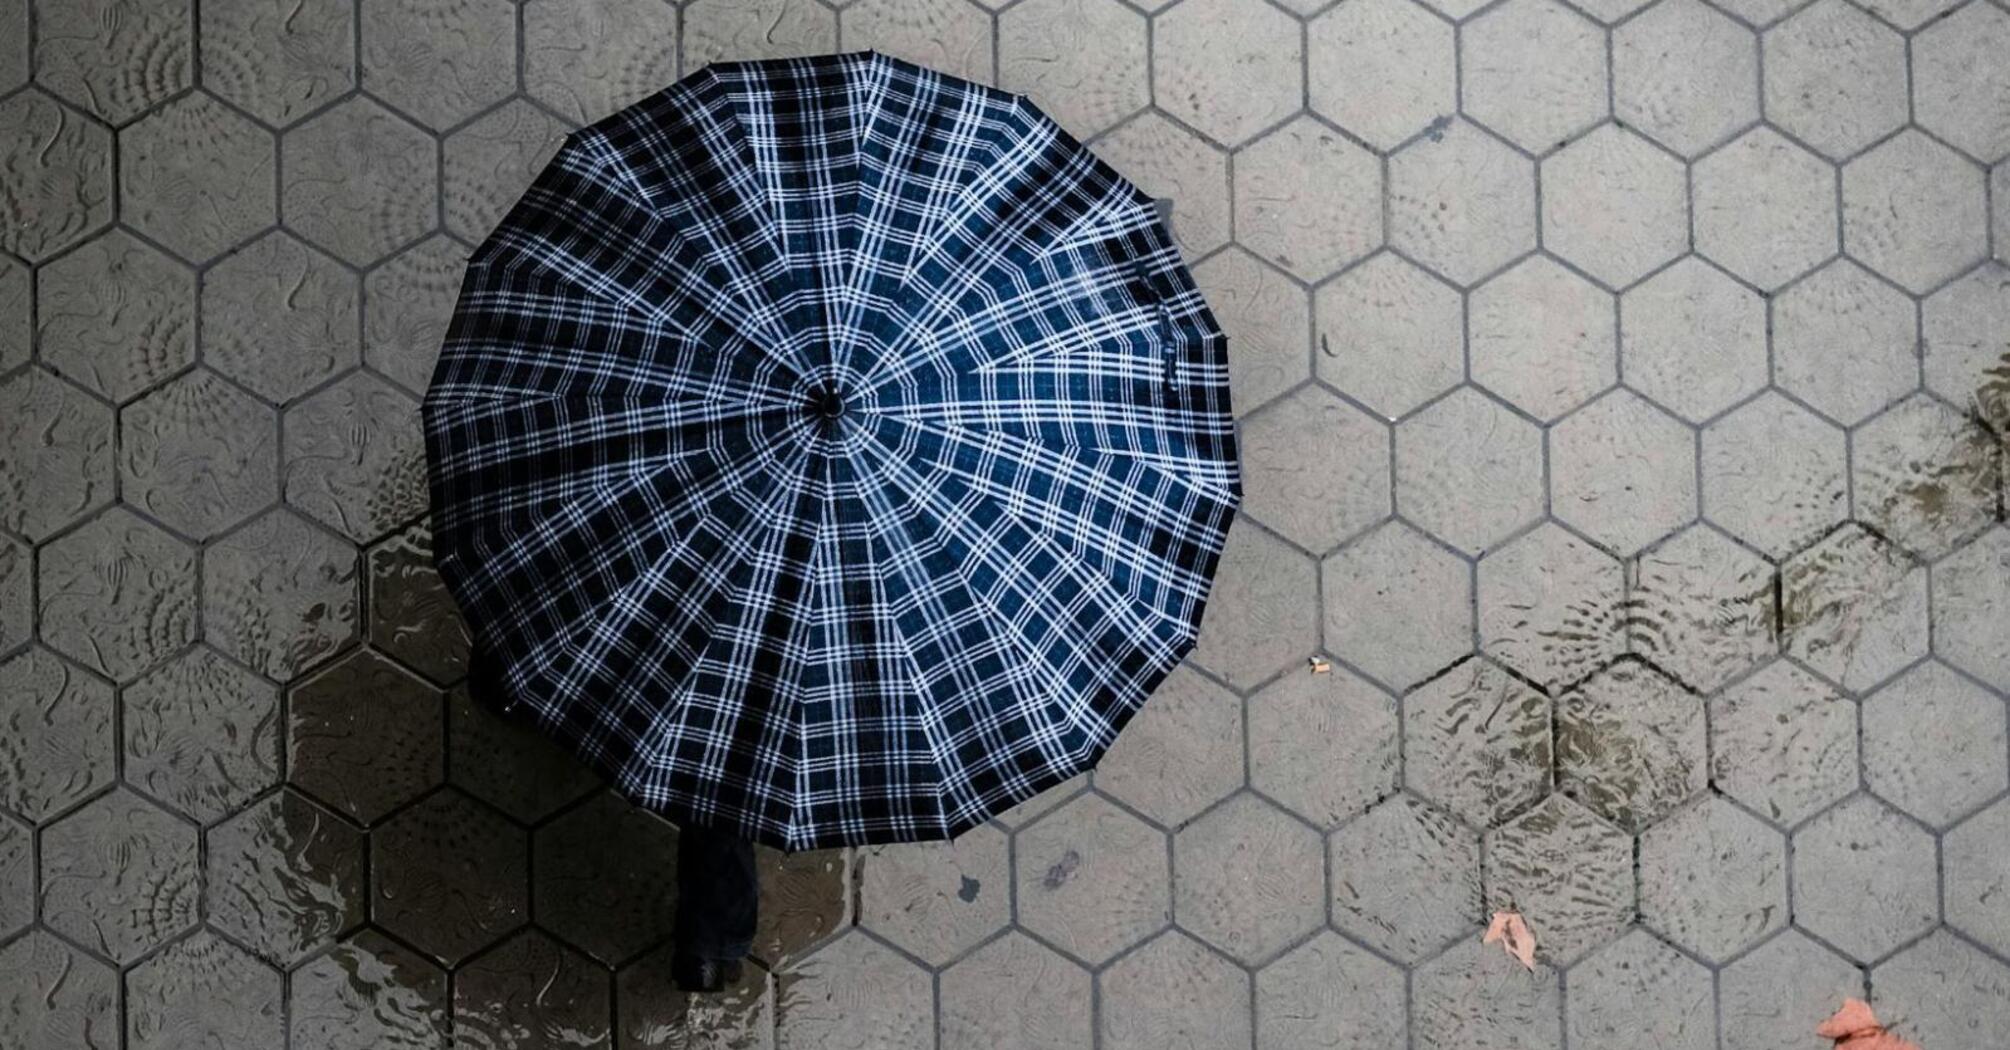 A birds eye view of a person under umbrella and a flooding rain 